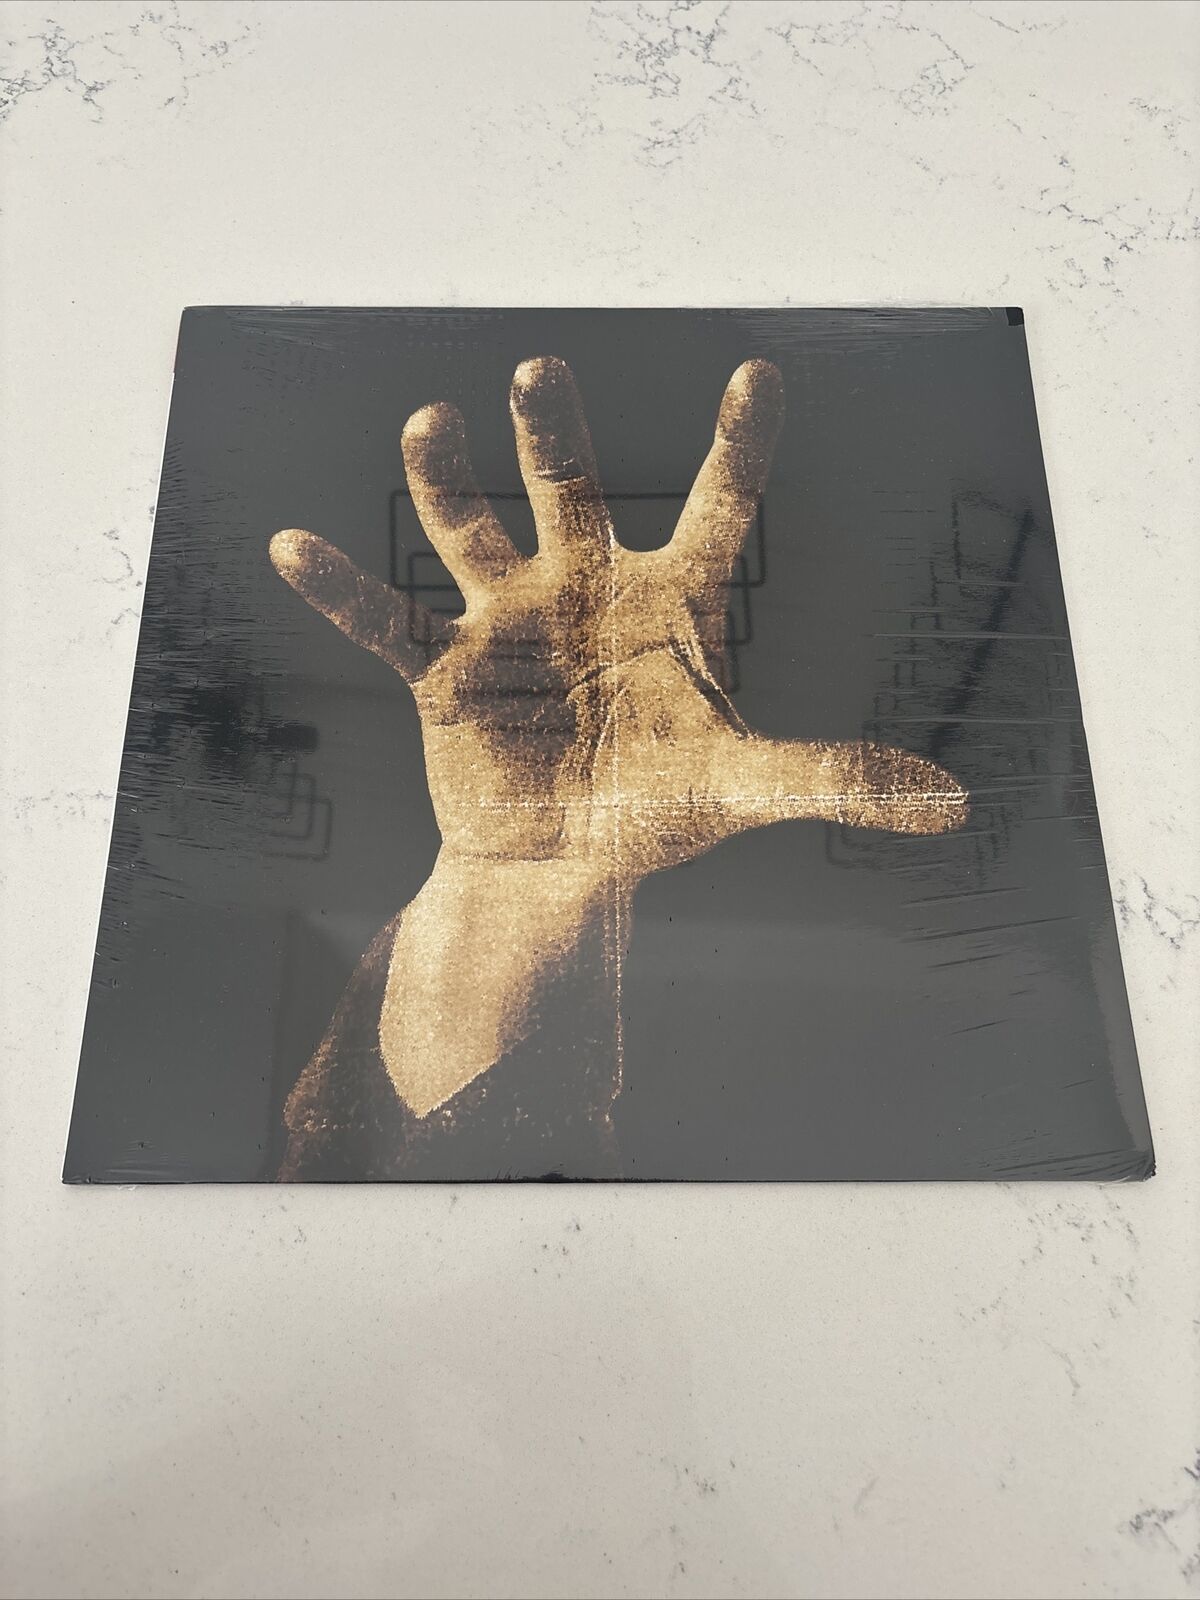 “System of a Down - System Of A Down” [New Vinyl LP] 140-Gram Vinyl Record Album